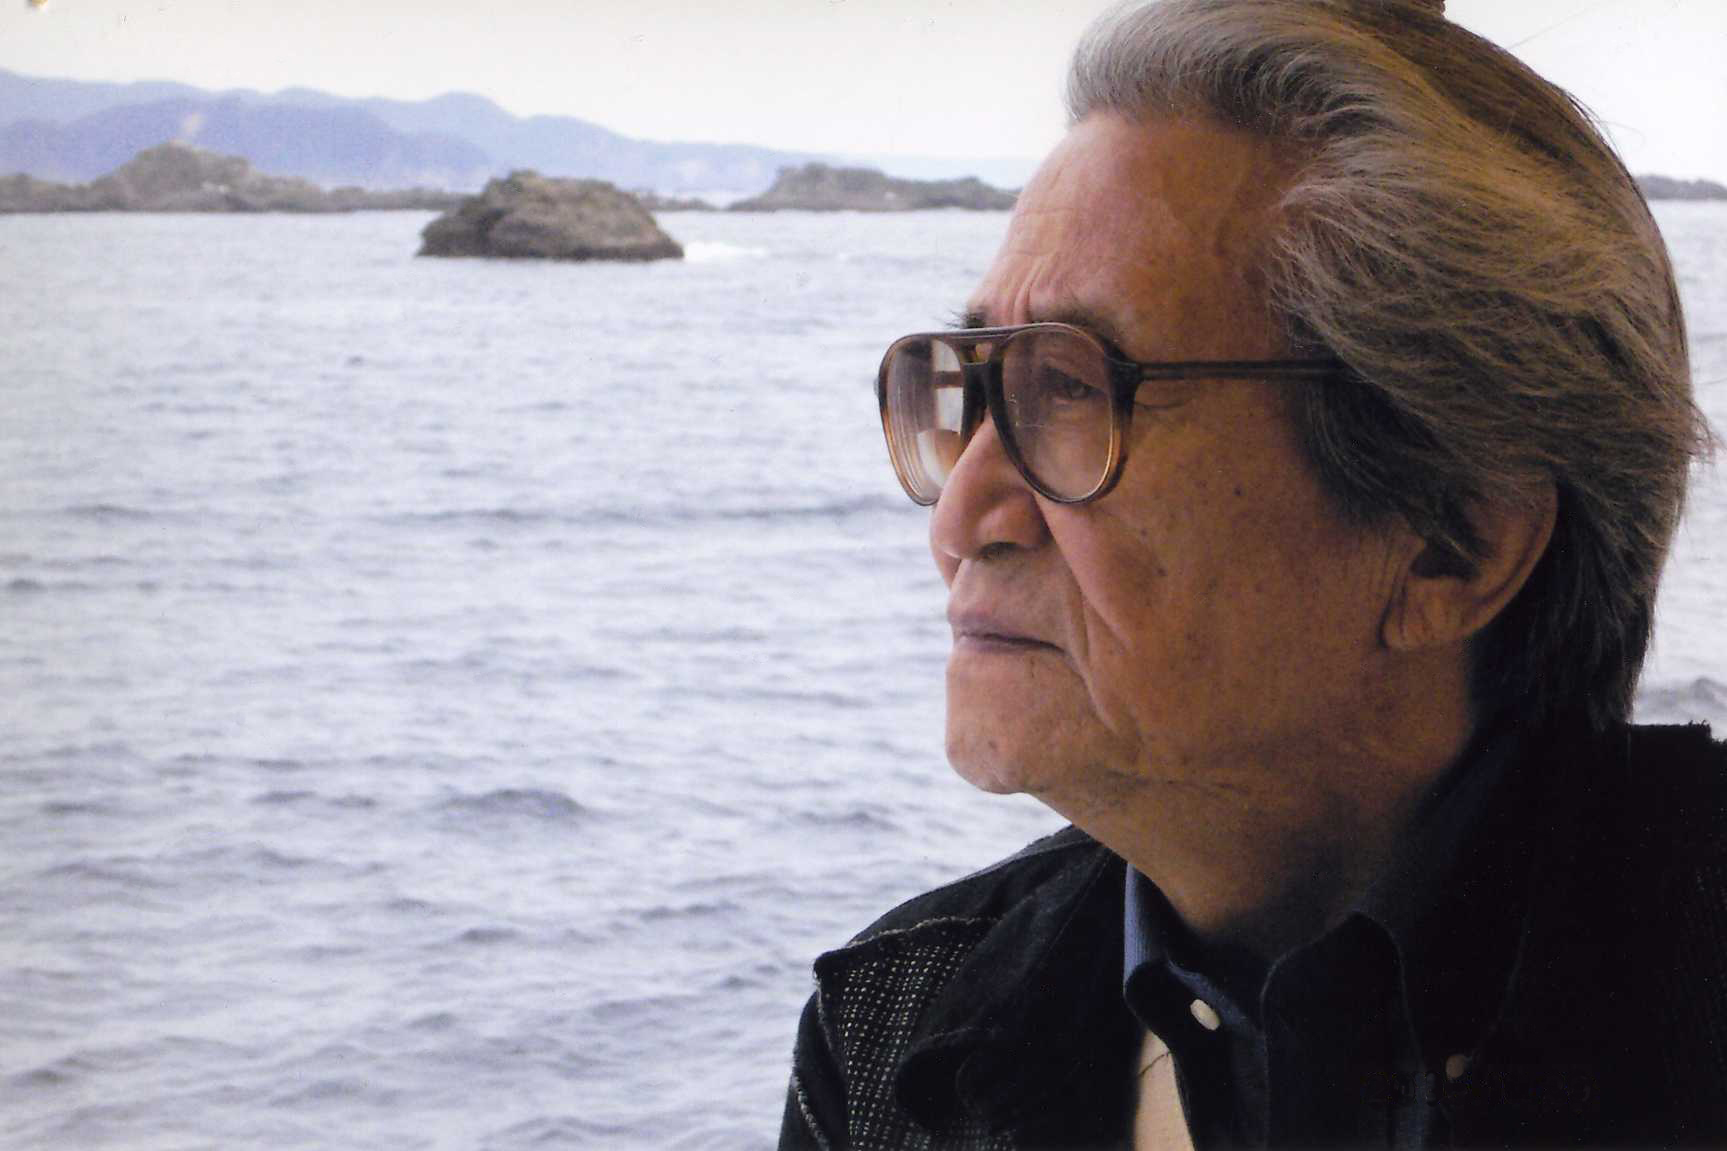 Noriaki Tsuchimoto, a Japanese man wearing glasses, stares out into the ocean. Photo courtesy of Motoko Tsuchimoto.